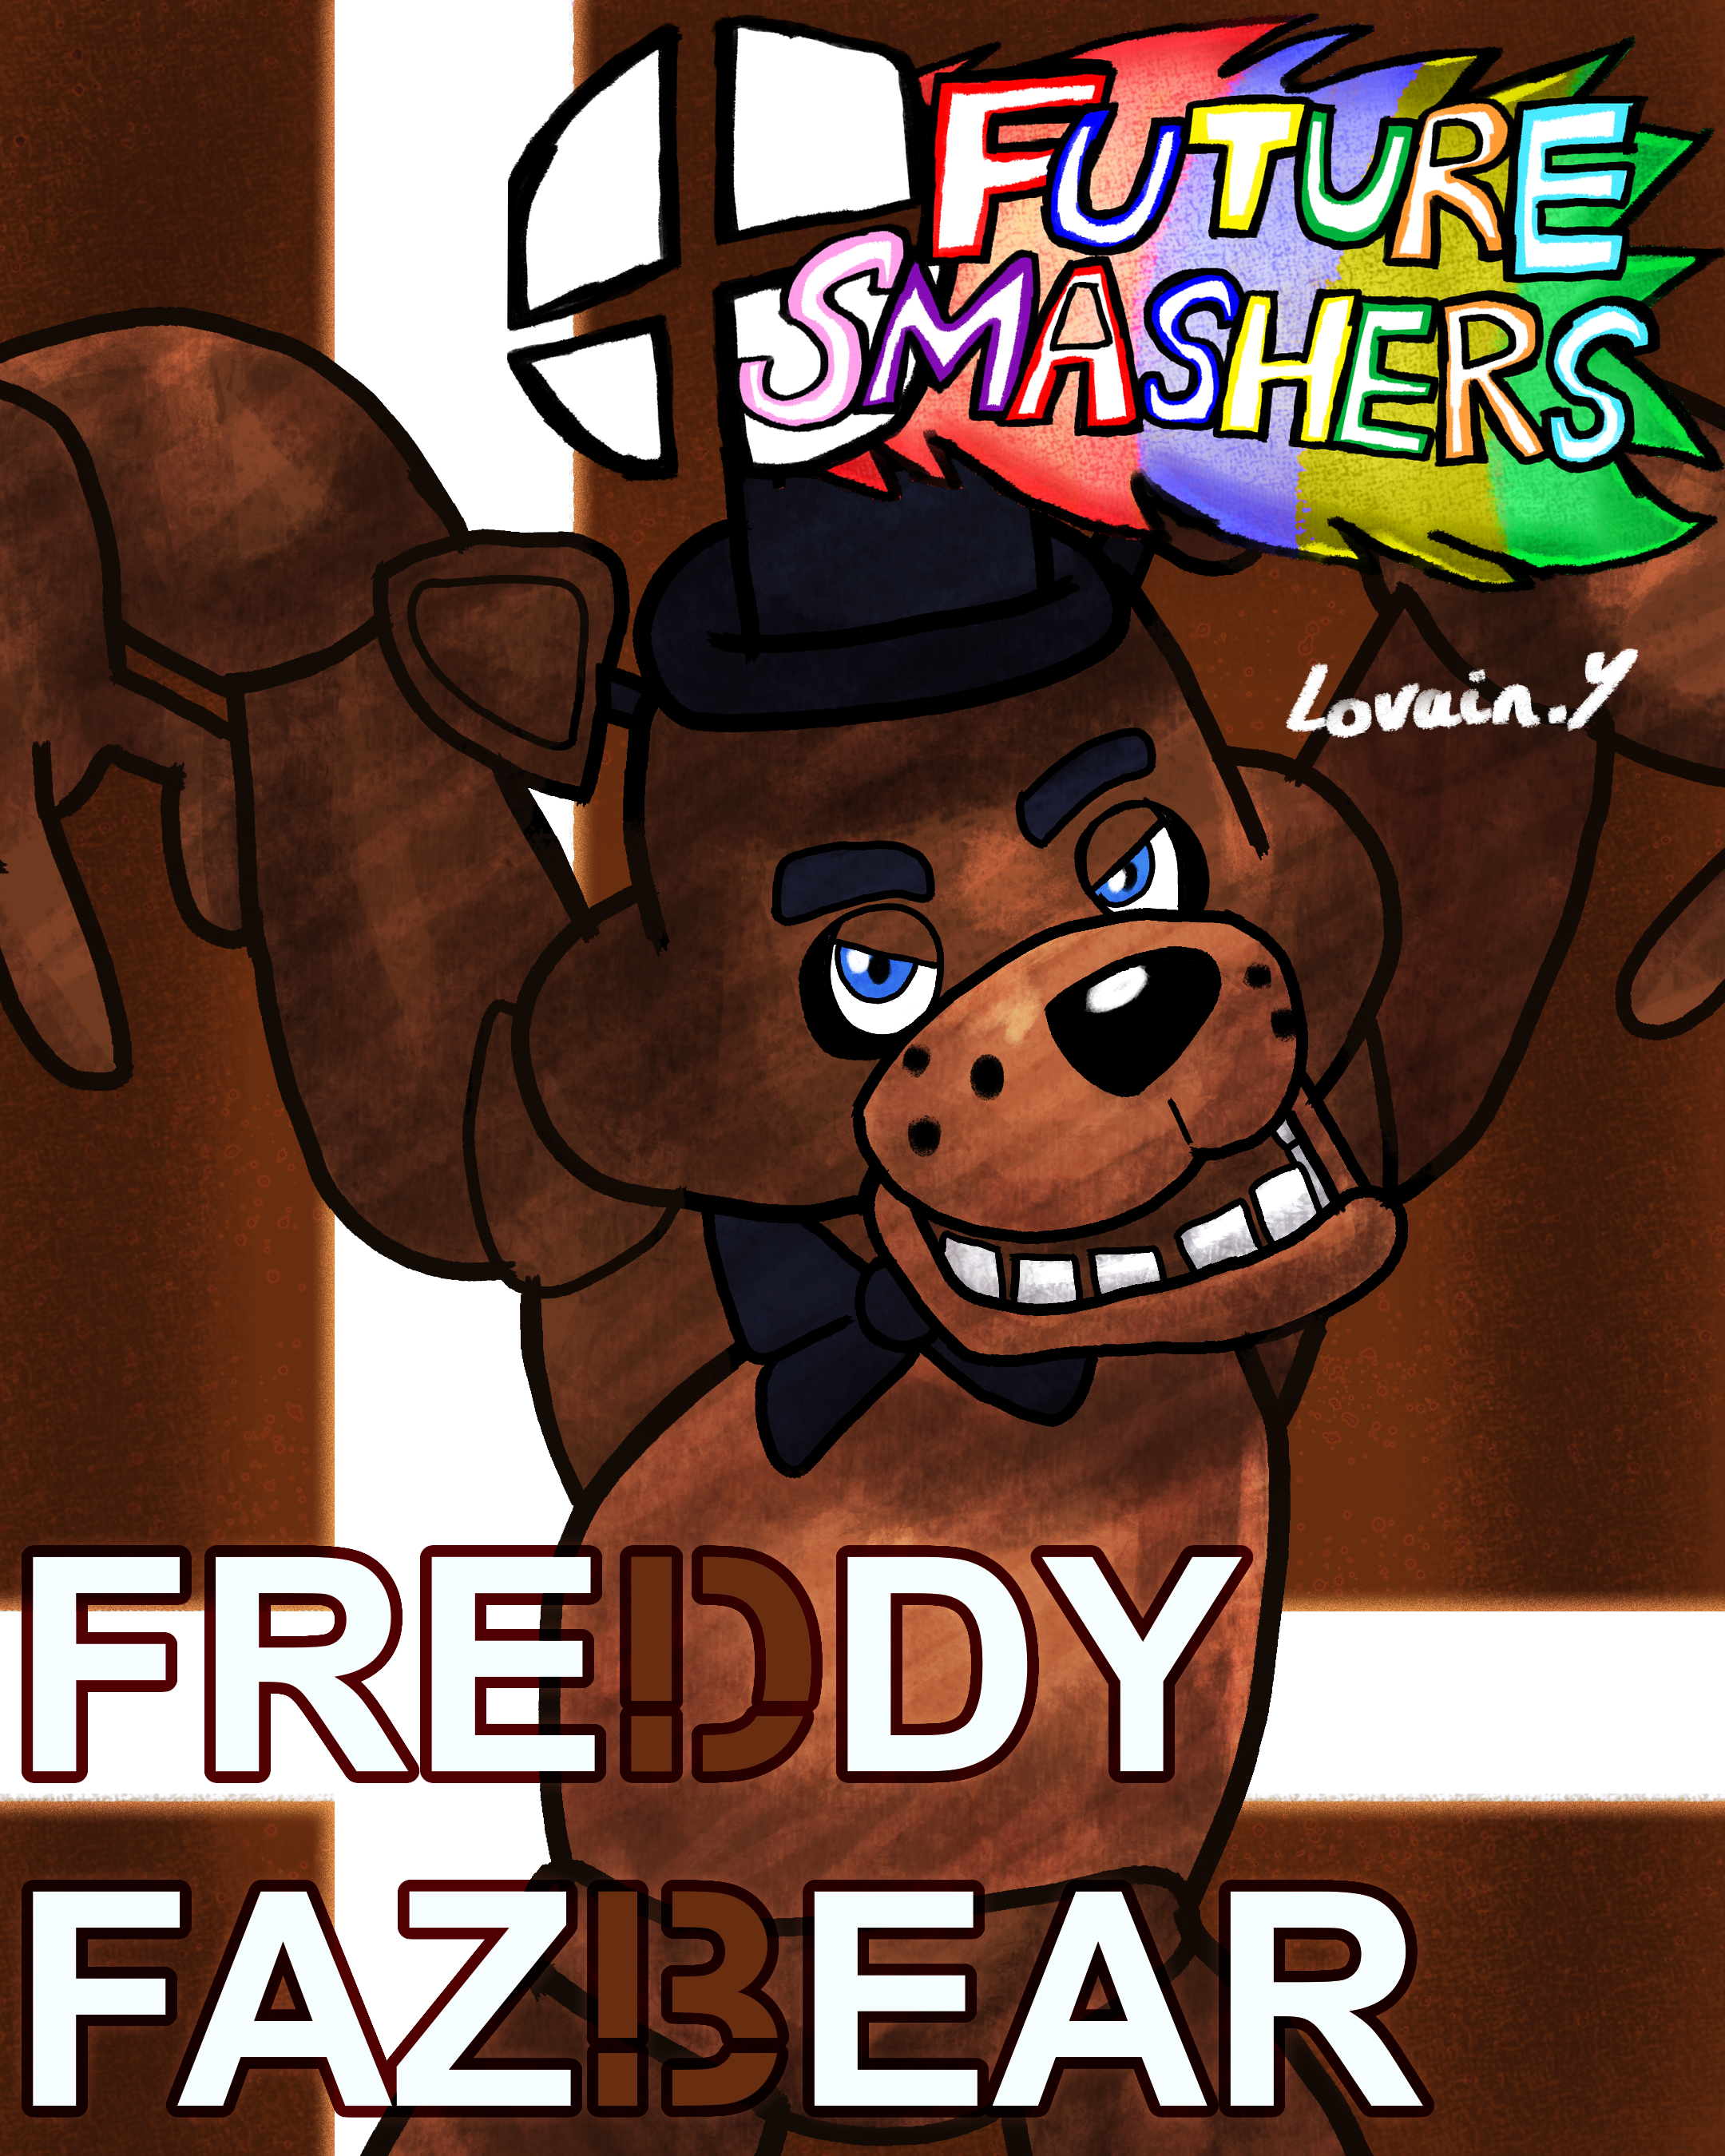 The History of Freddy Fazbear (Five Nights at Freddy's)